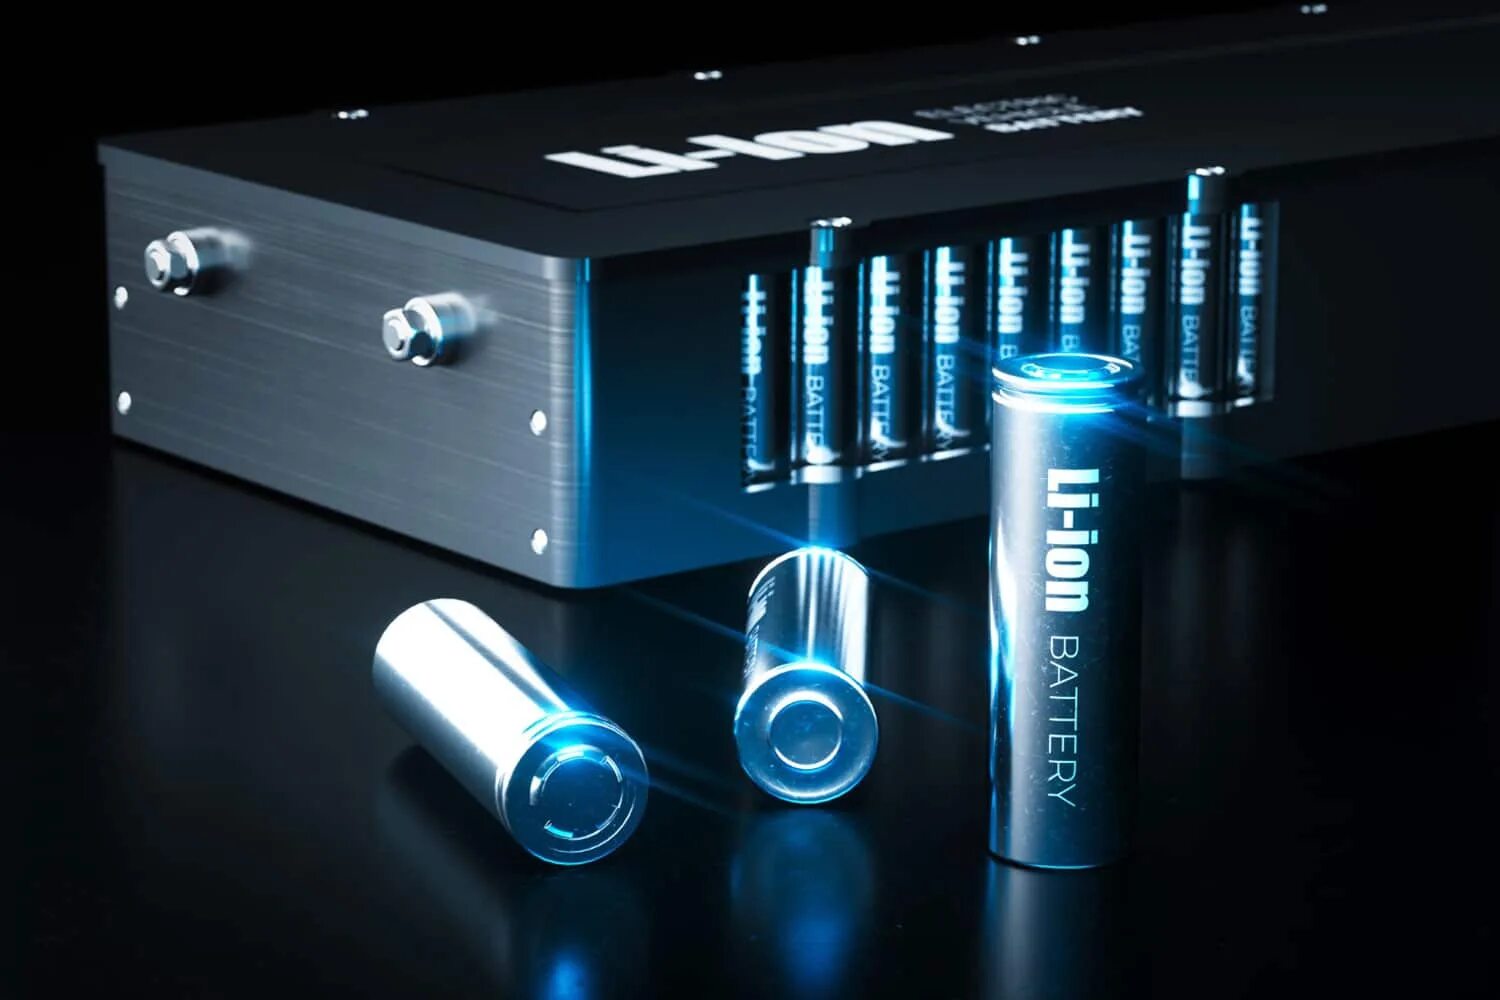 Ion batteries. Литий-металлические батареи. Металлический аккумулятор. Литий-металлические батареи для электрокаров. Гаджеты с литиевыми аккумуляторами.